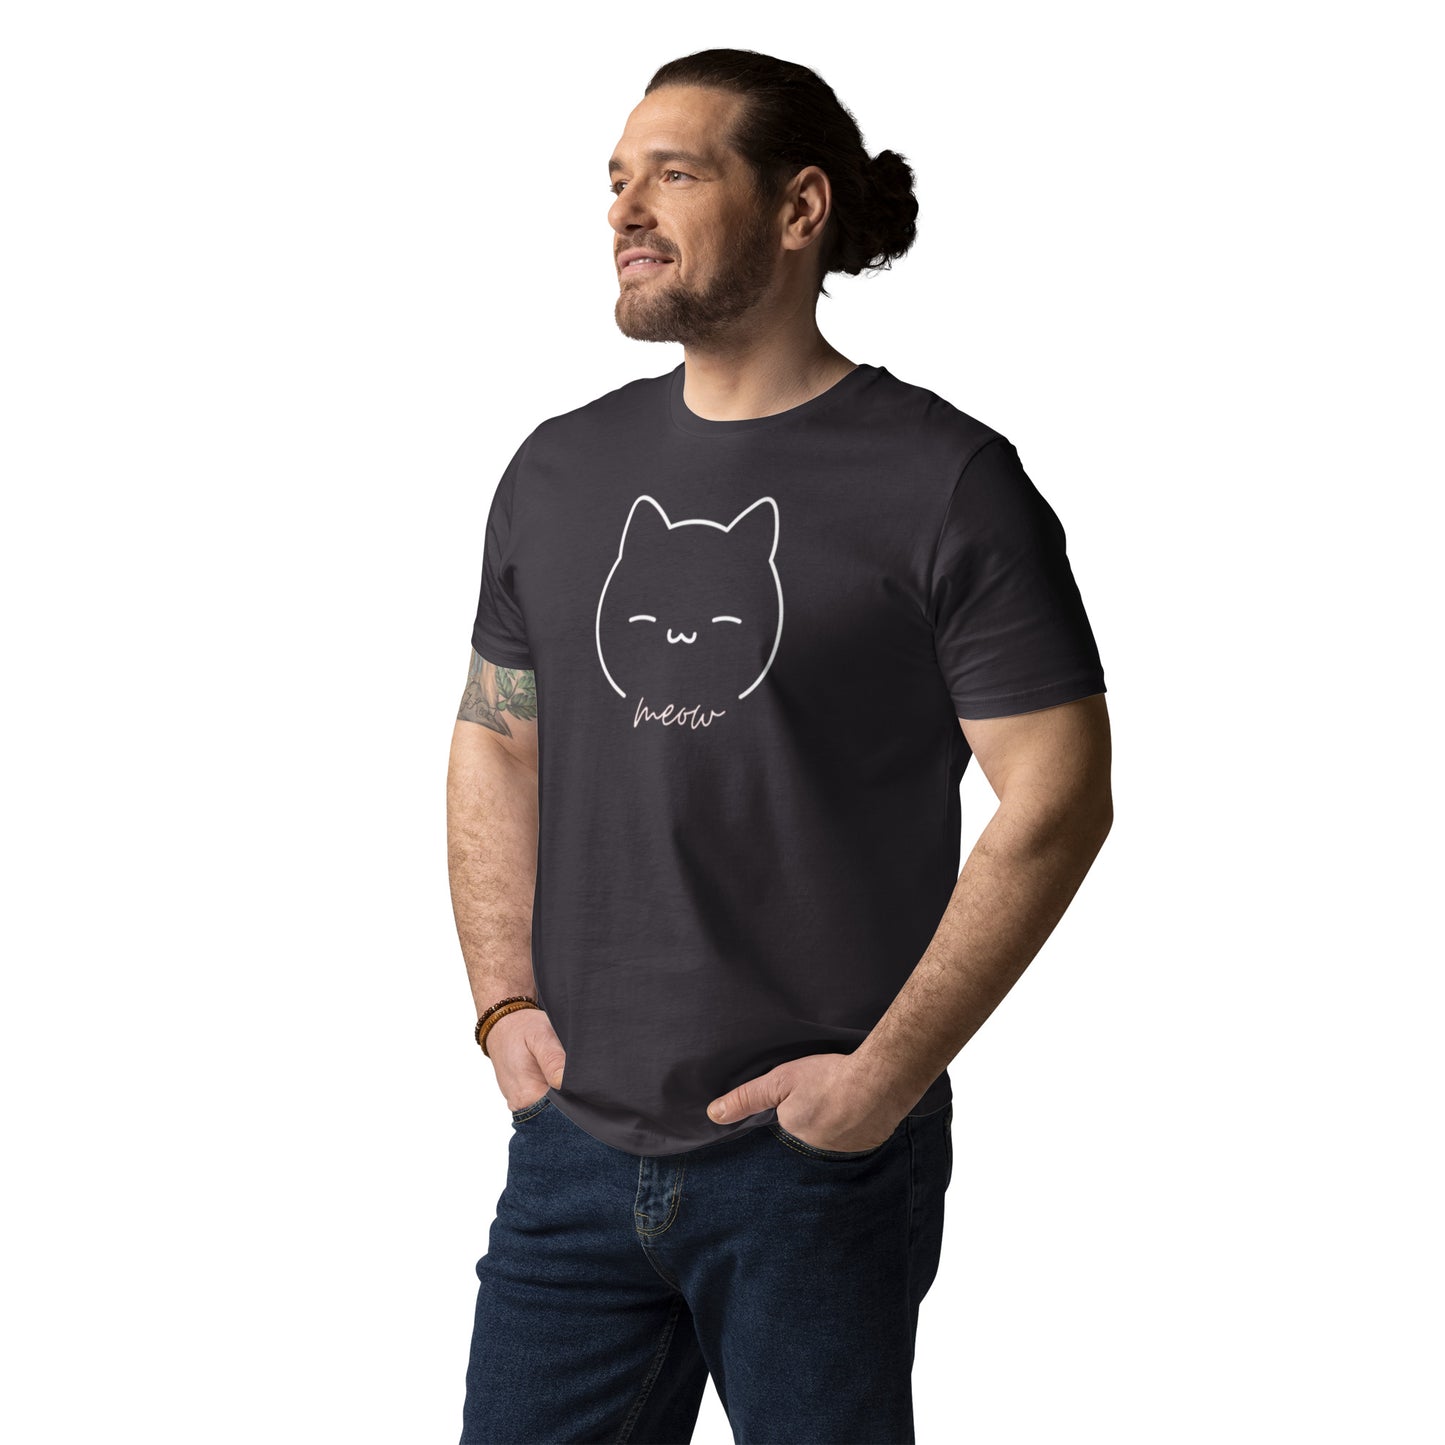 Meowwww - Unisex organic cotton t-shirt